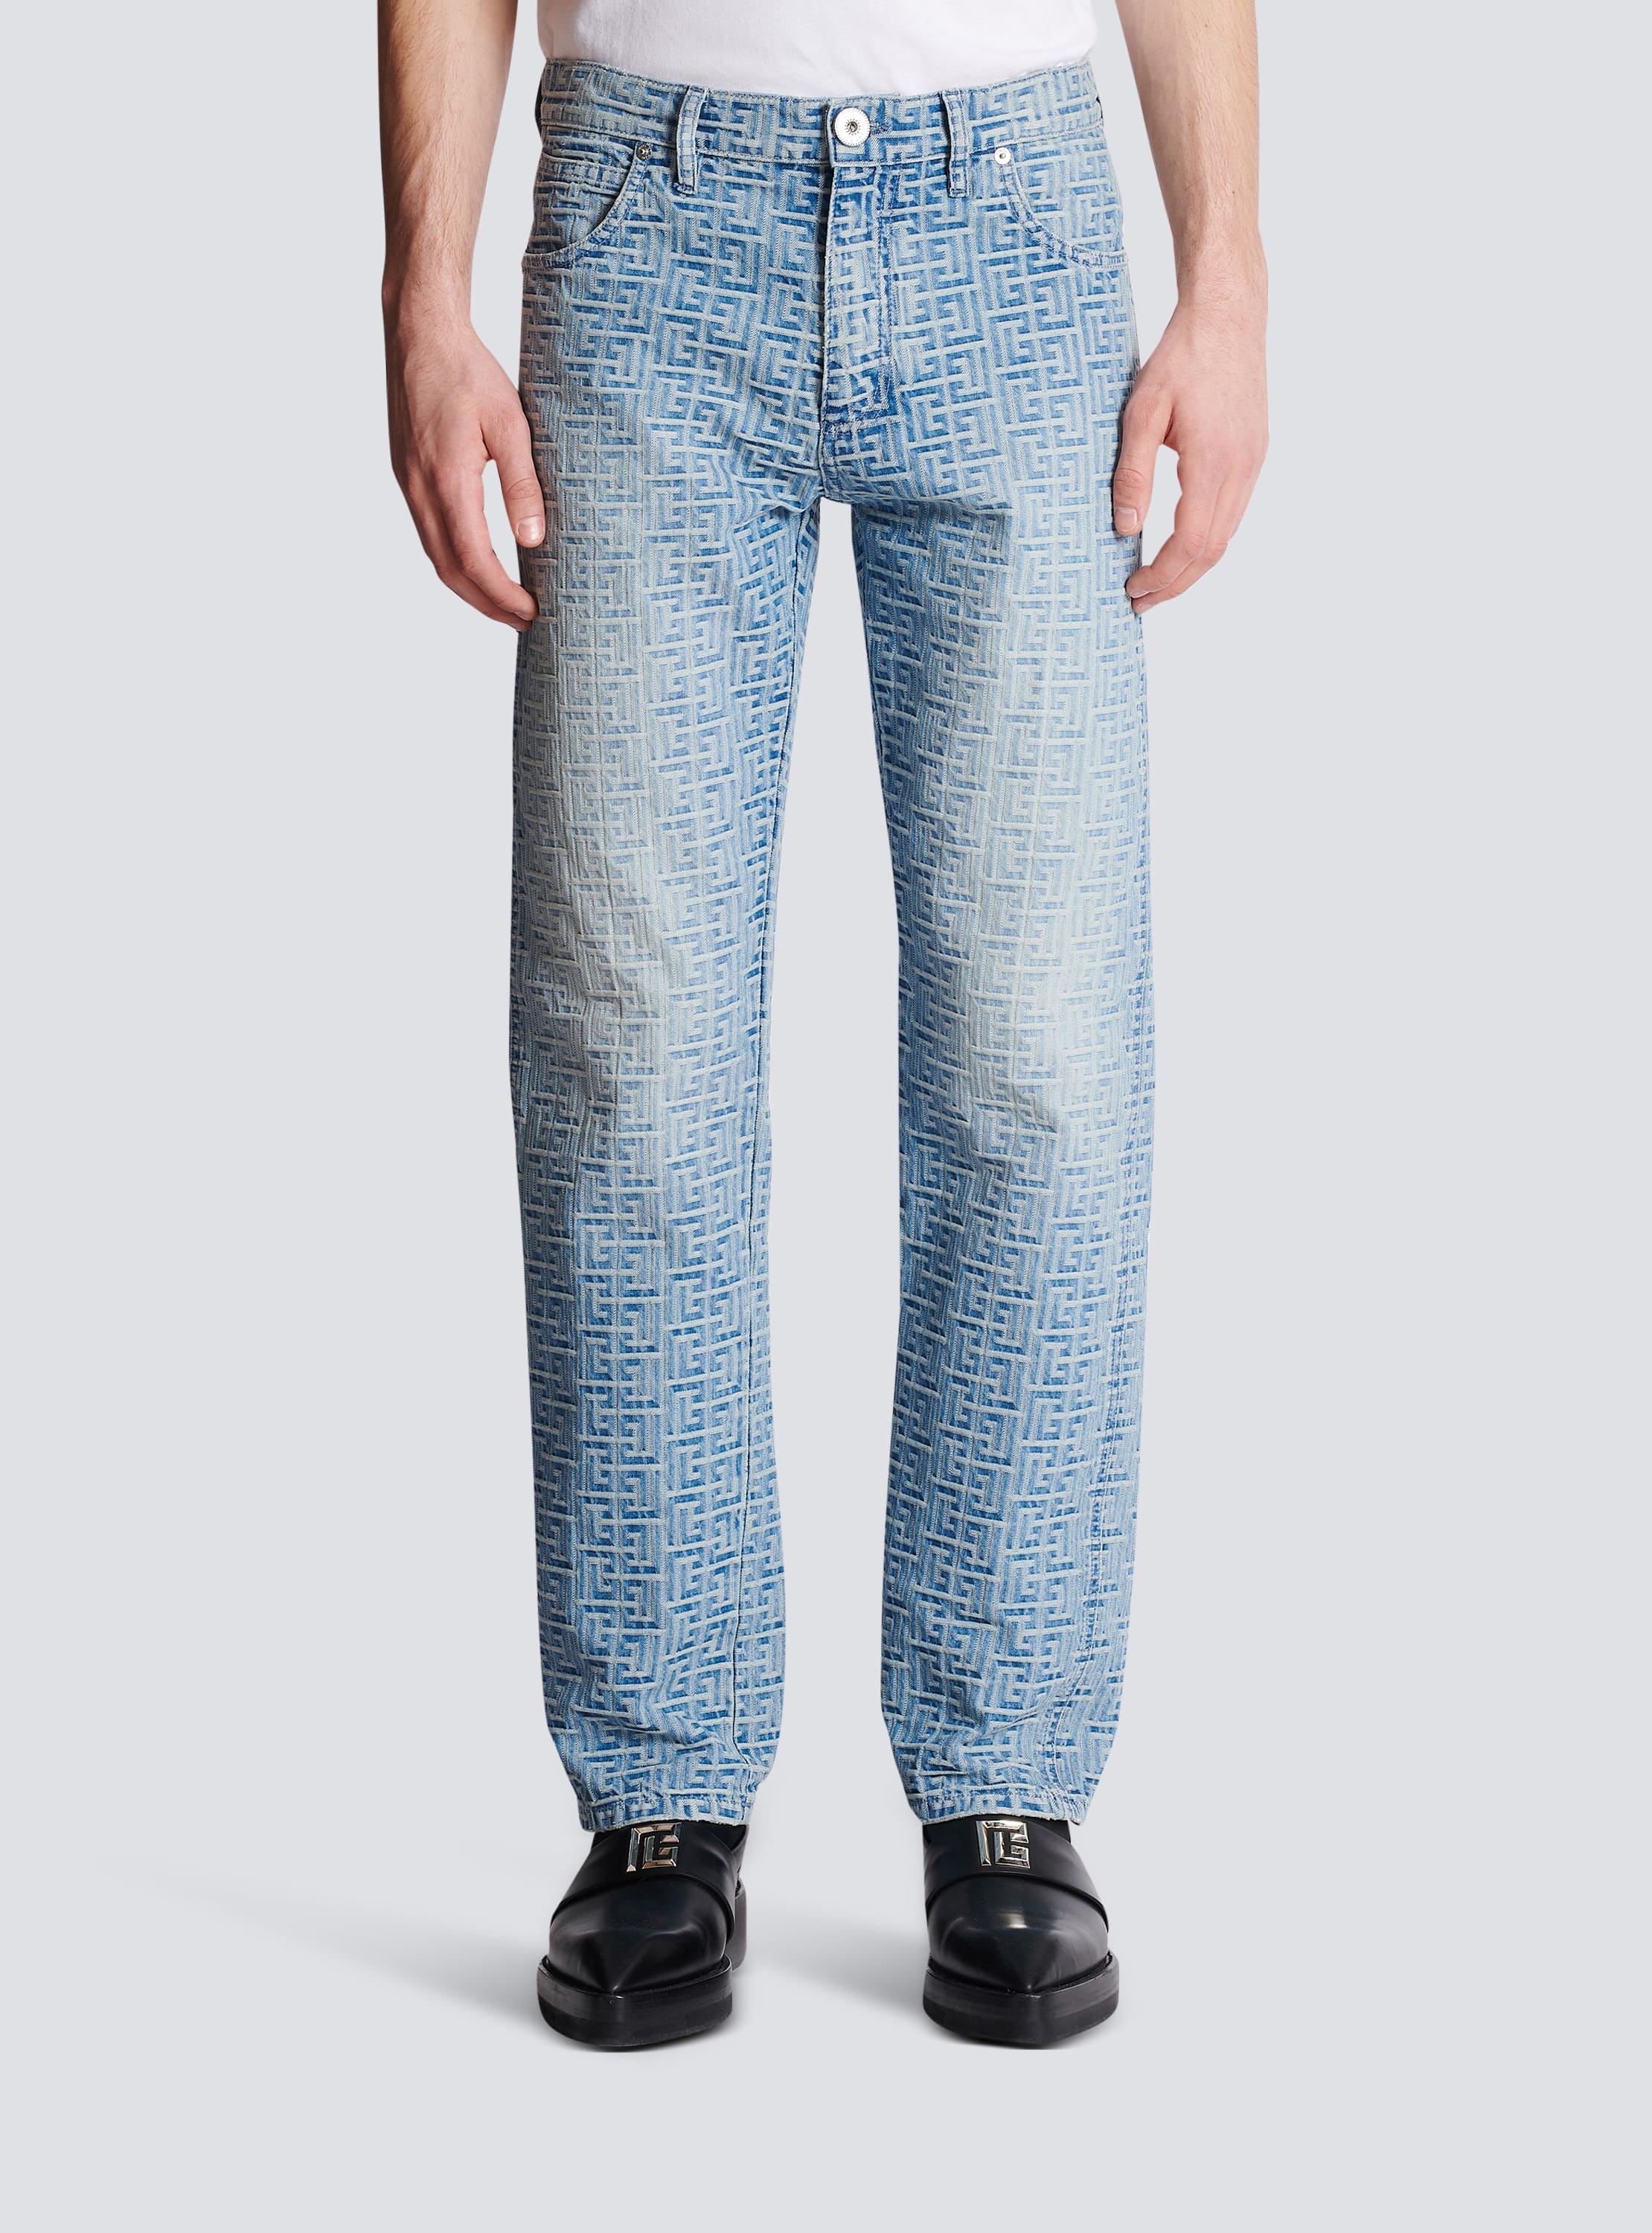 Monogrammed jacquard denim jeans